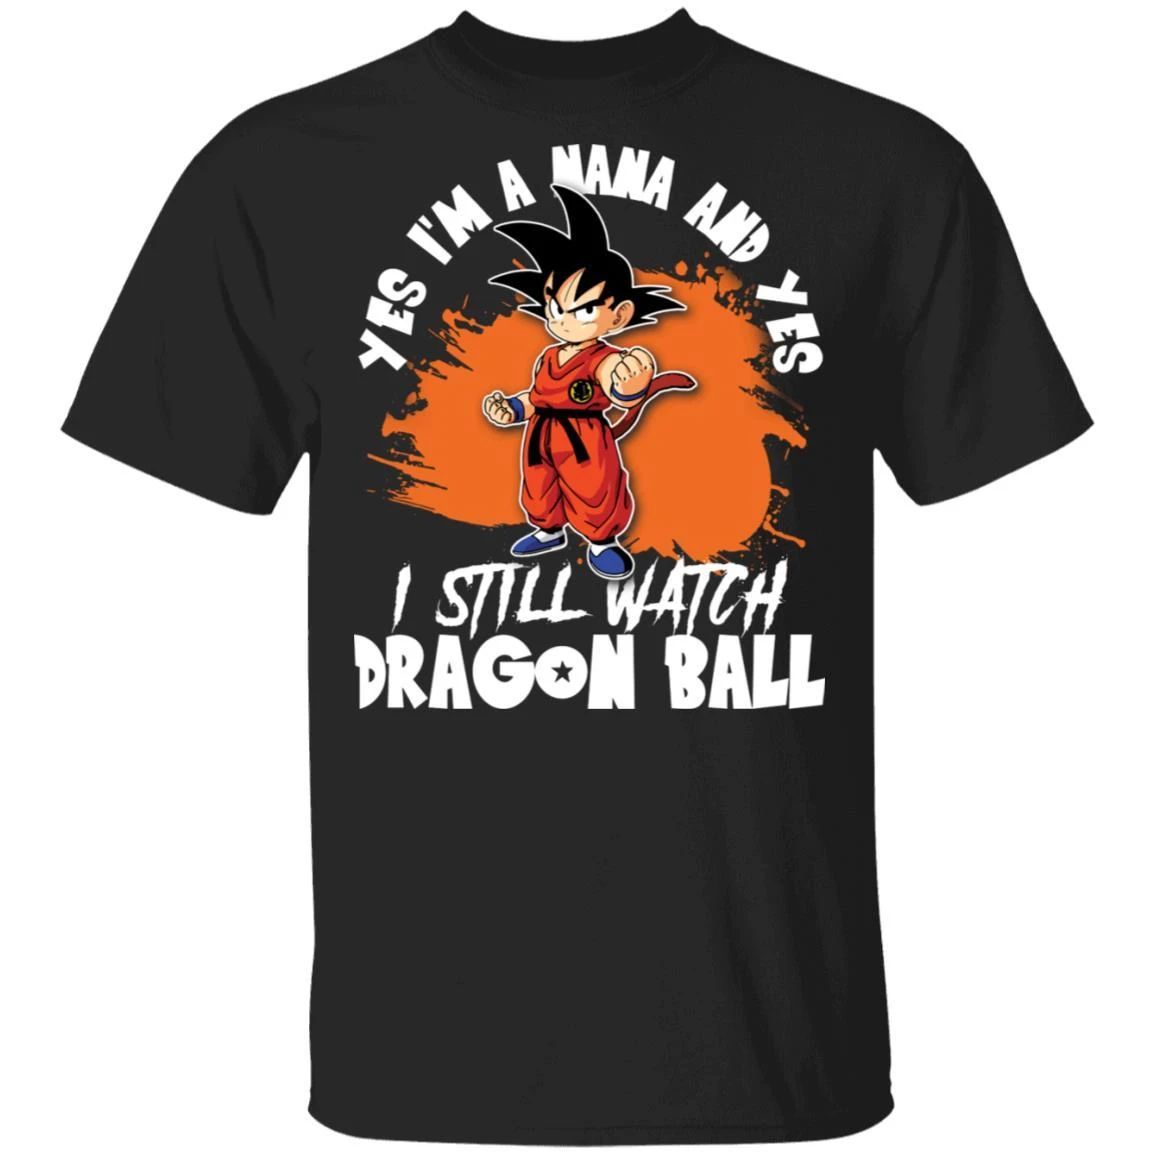 Yes I’m A Nana And Yes I Still Watch Dragon Ball Shirt Son Goku Tee